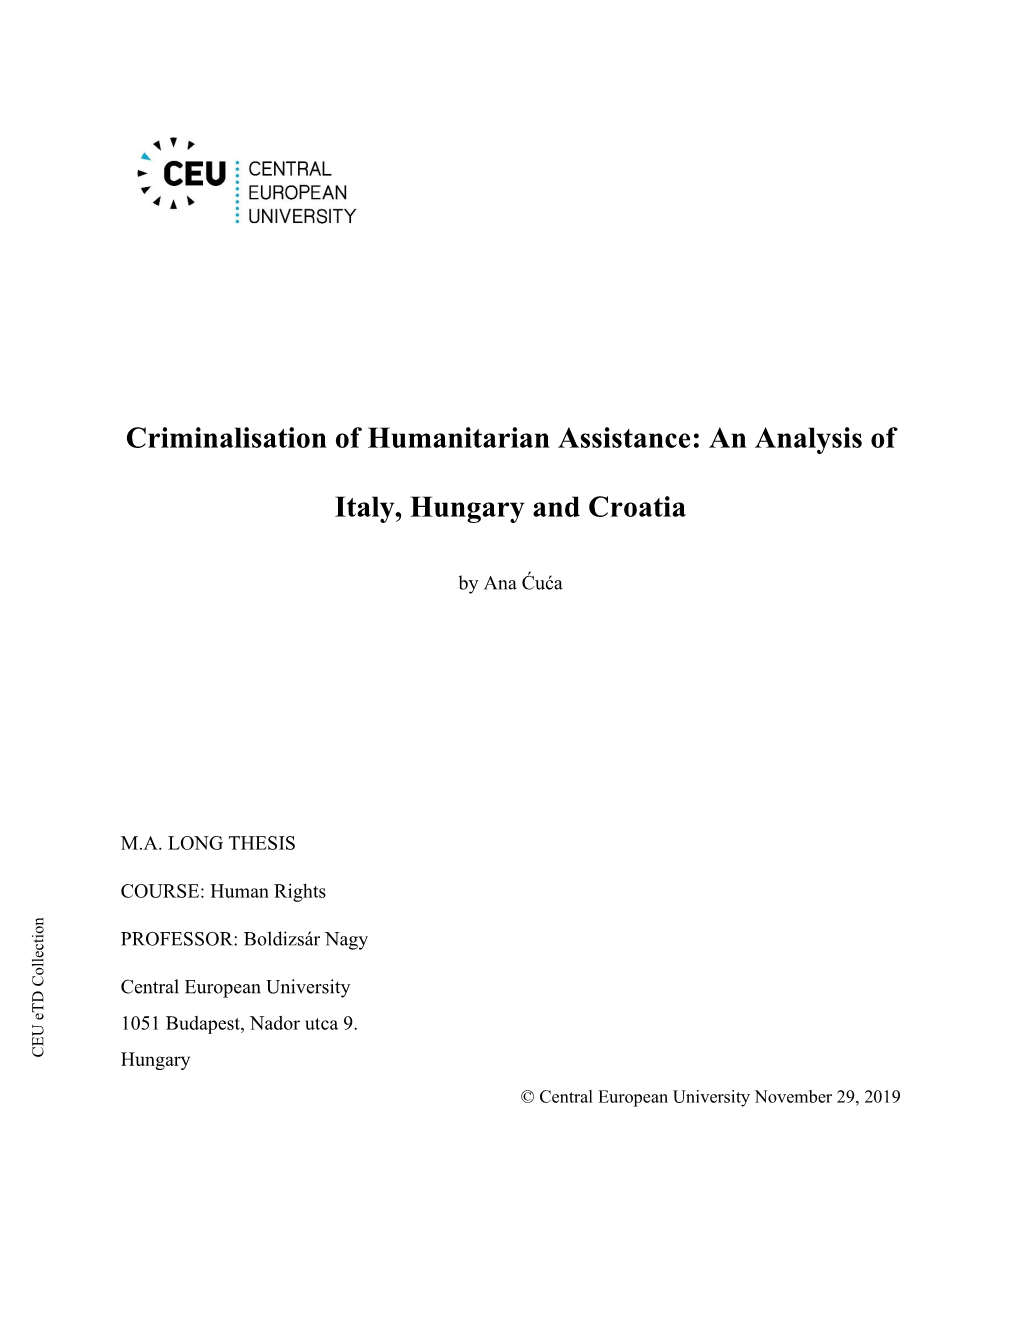 Criminalisation of Humanitarian Assistance: an Analysis of Italy